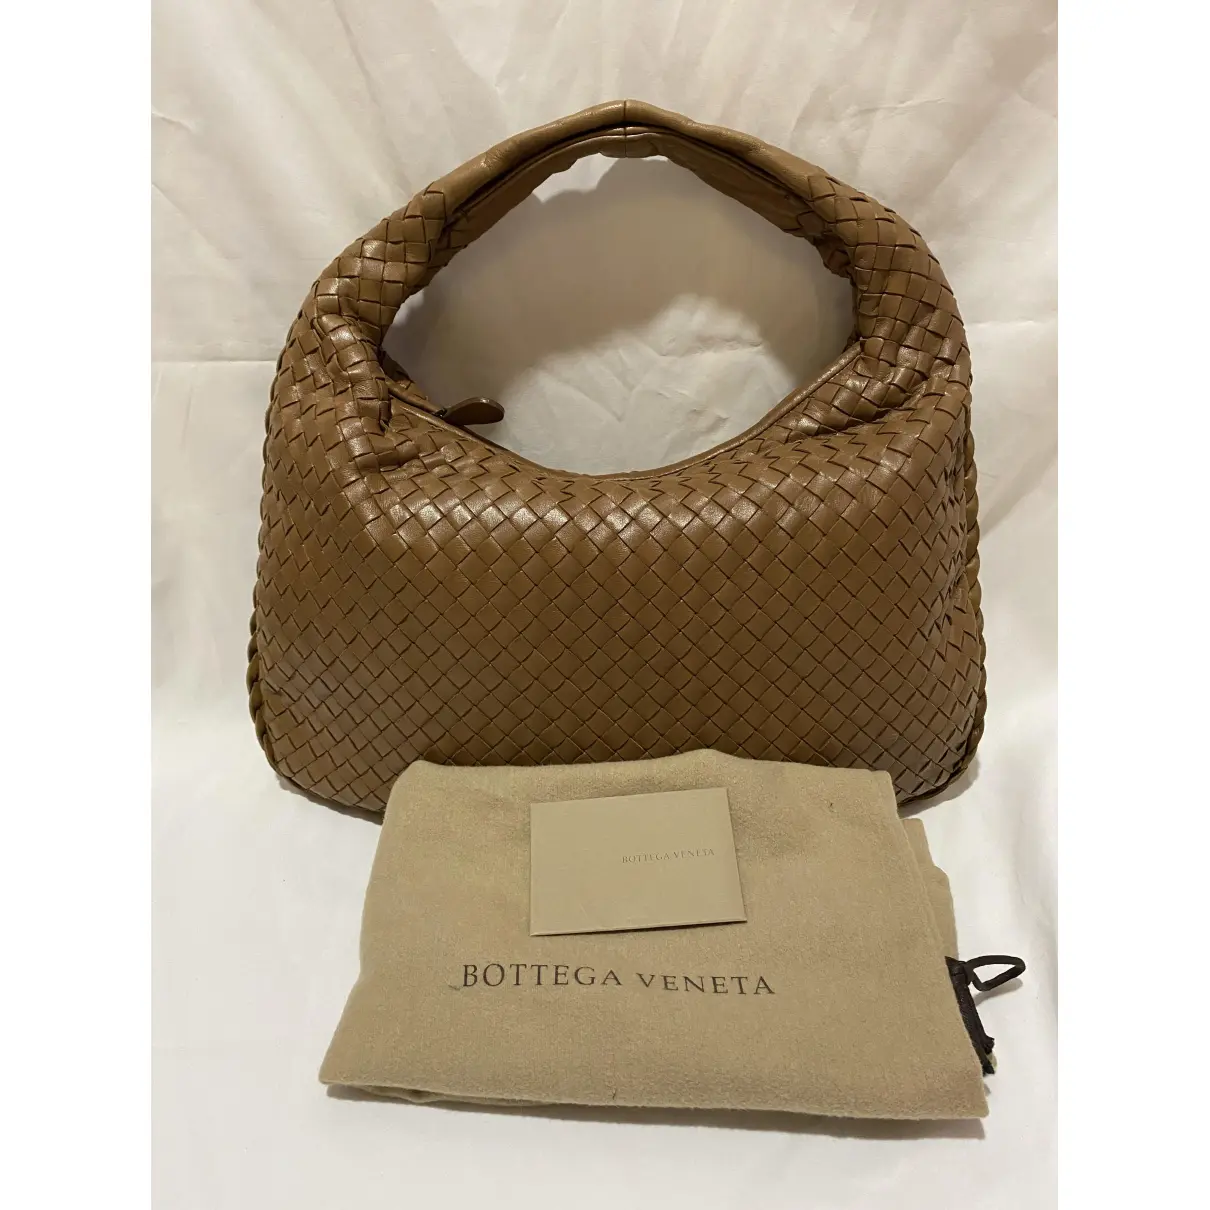 Veneta leather bag Bottega Veneta - Vintage